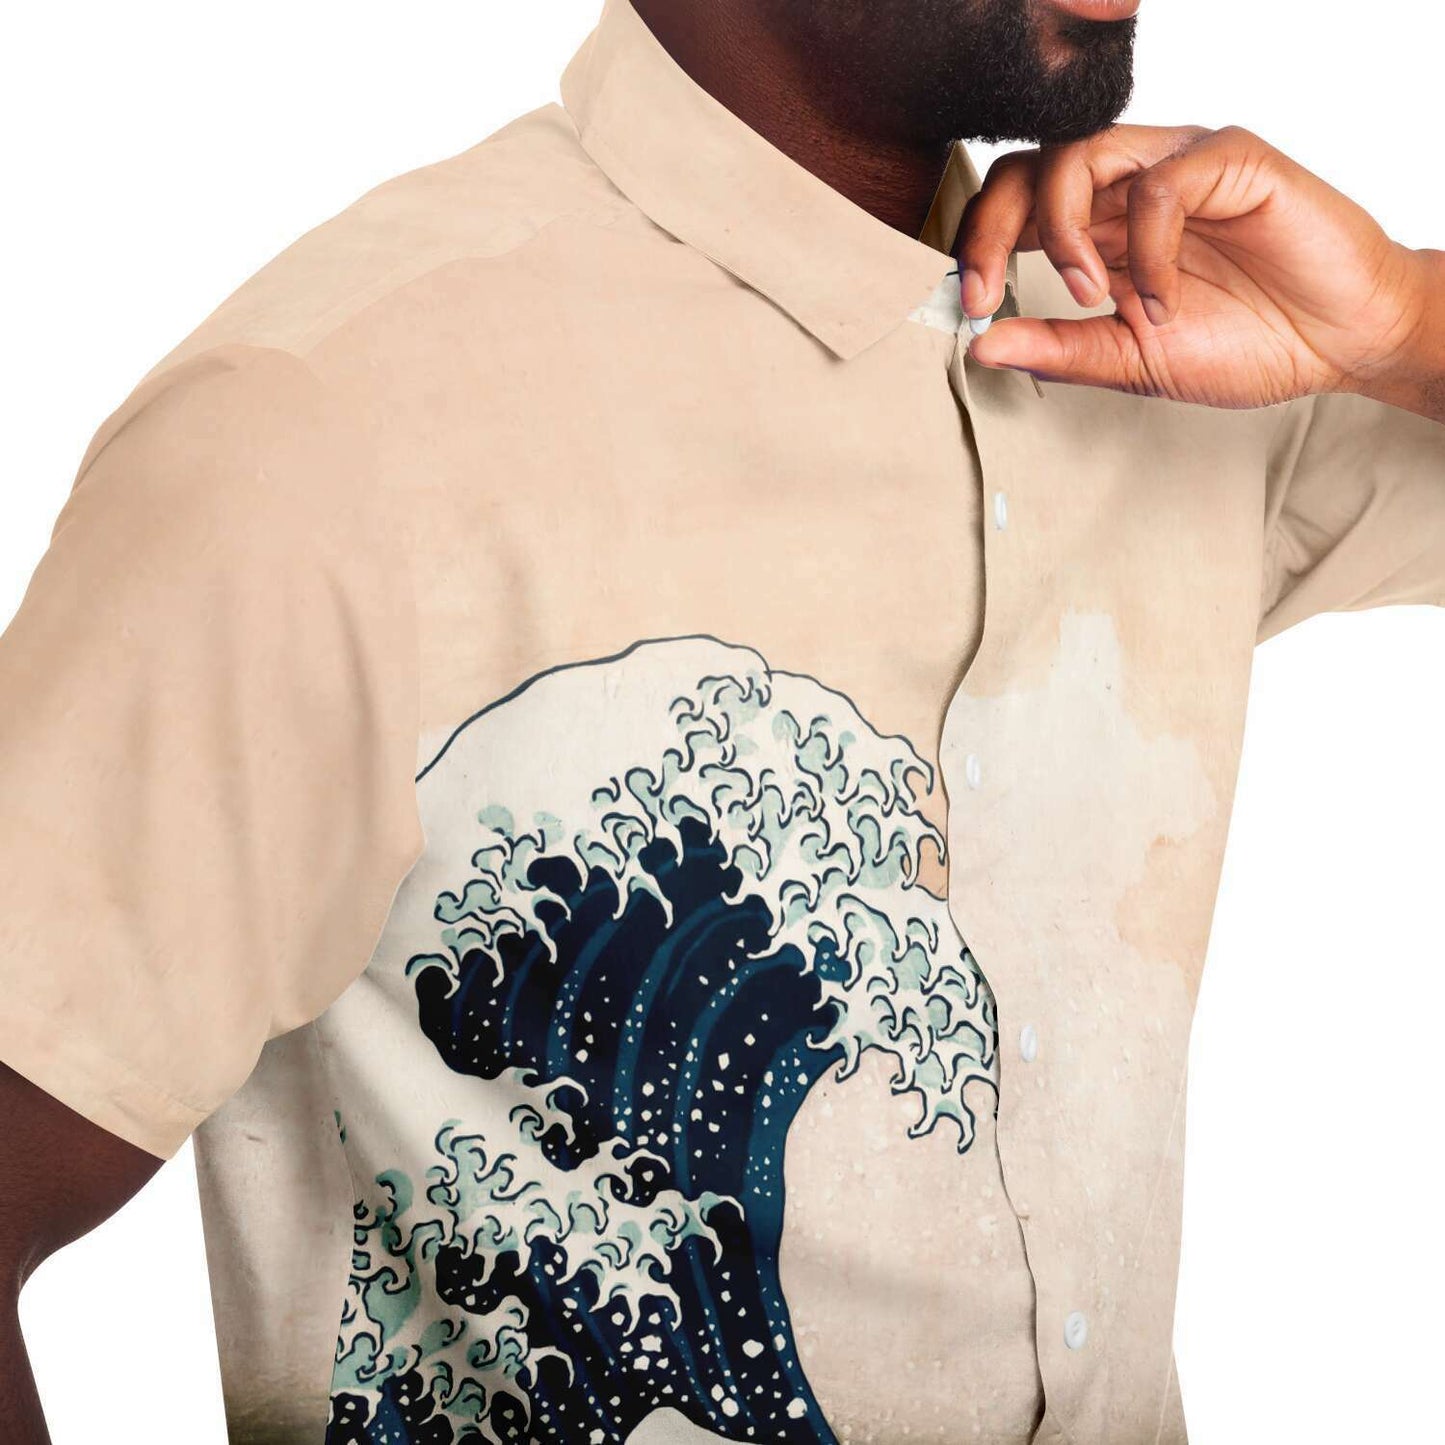 Hokusai La gran ola de Kanagawa CAMISA BOTONES